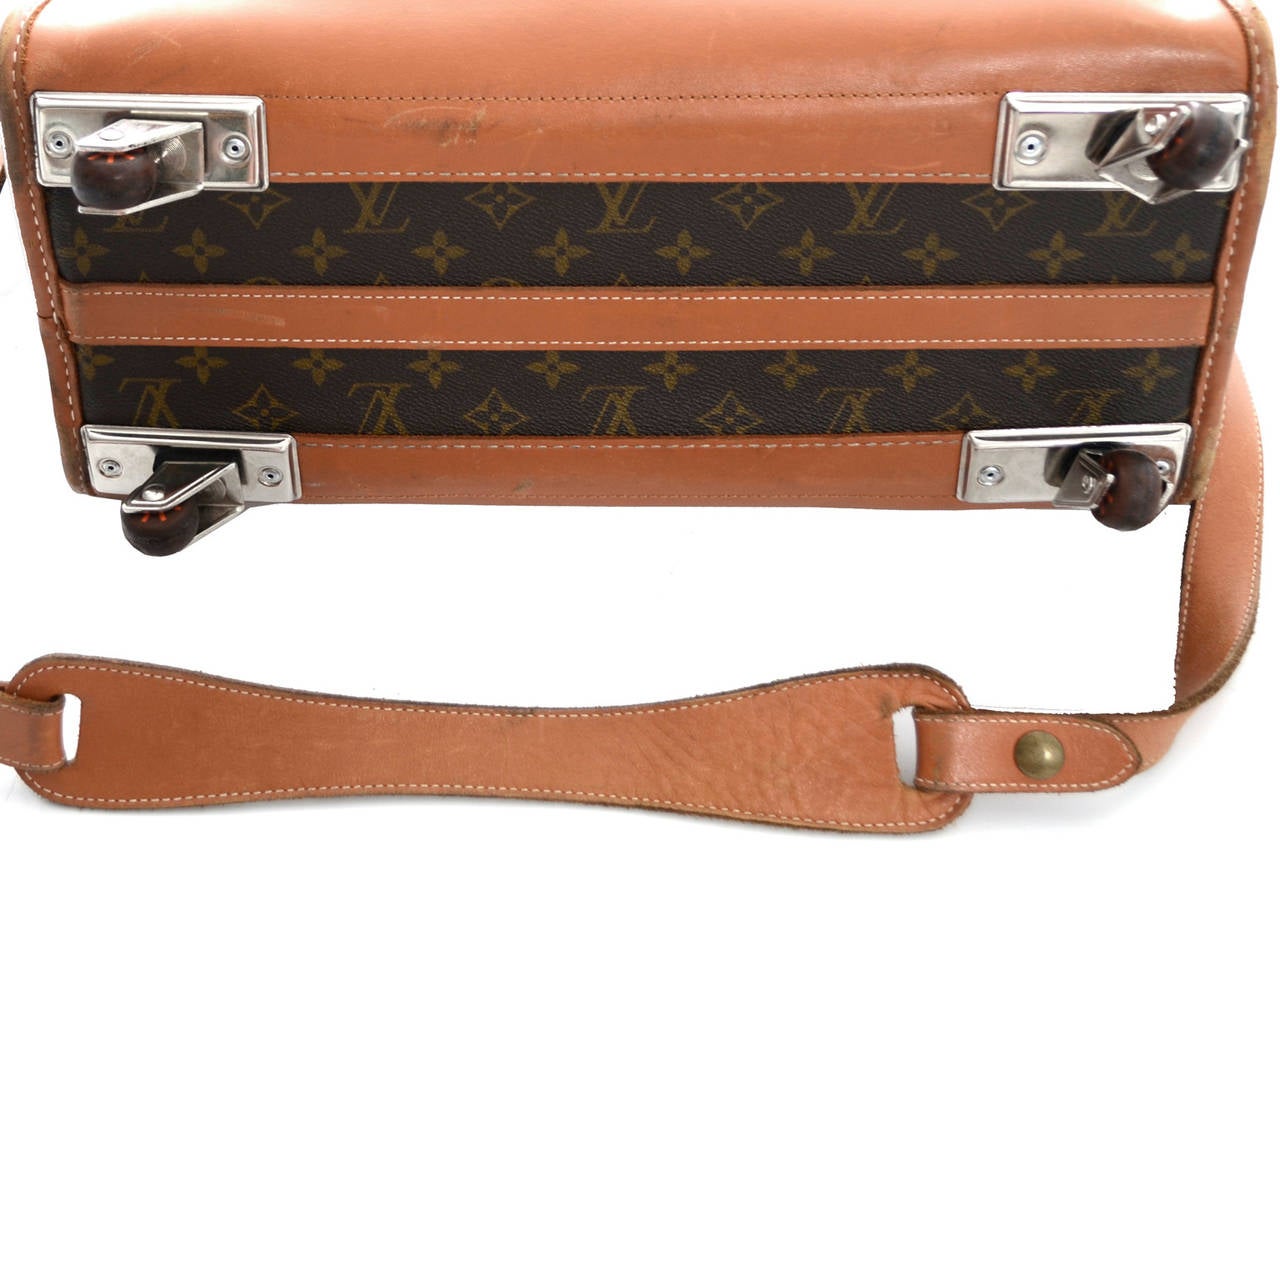 Authentic Vintage Louis Vuitton Rolling Monogram Canvas Weekender Bag Luggage 2